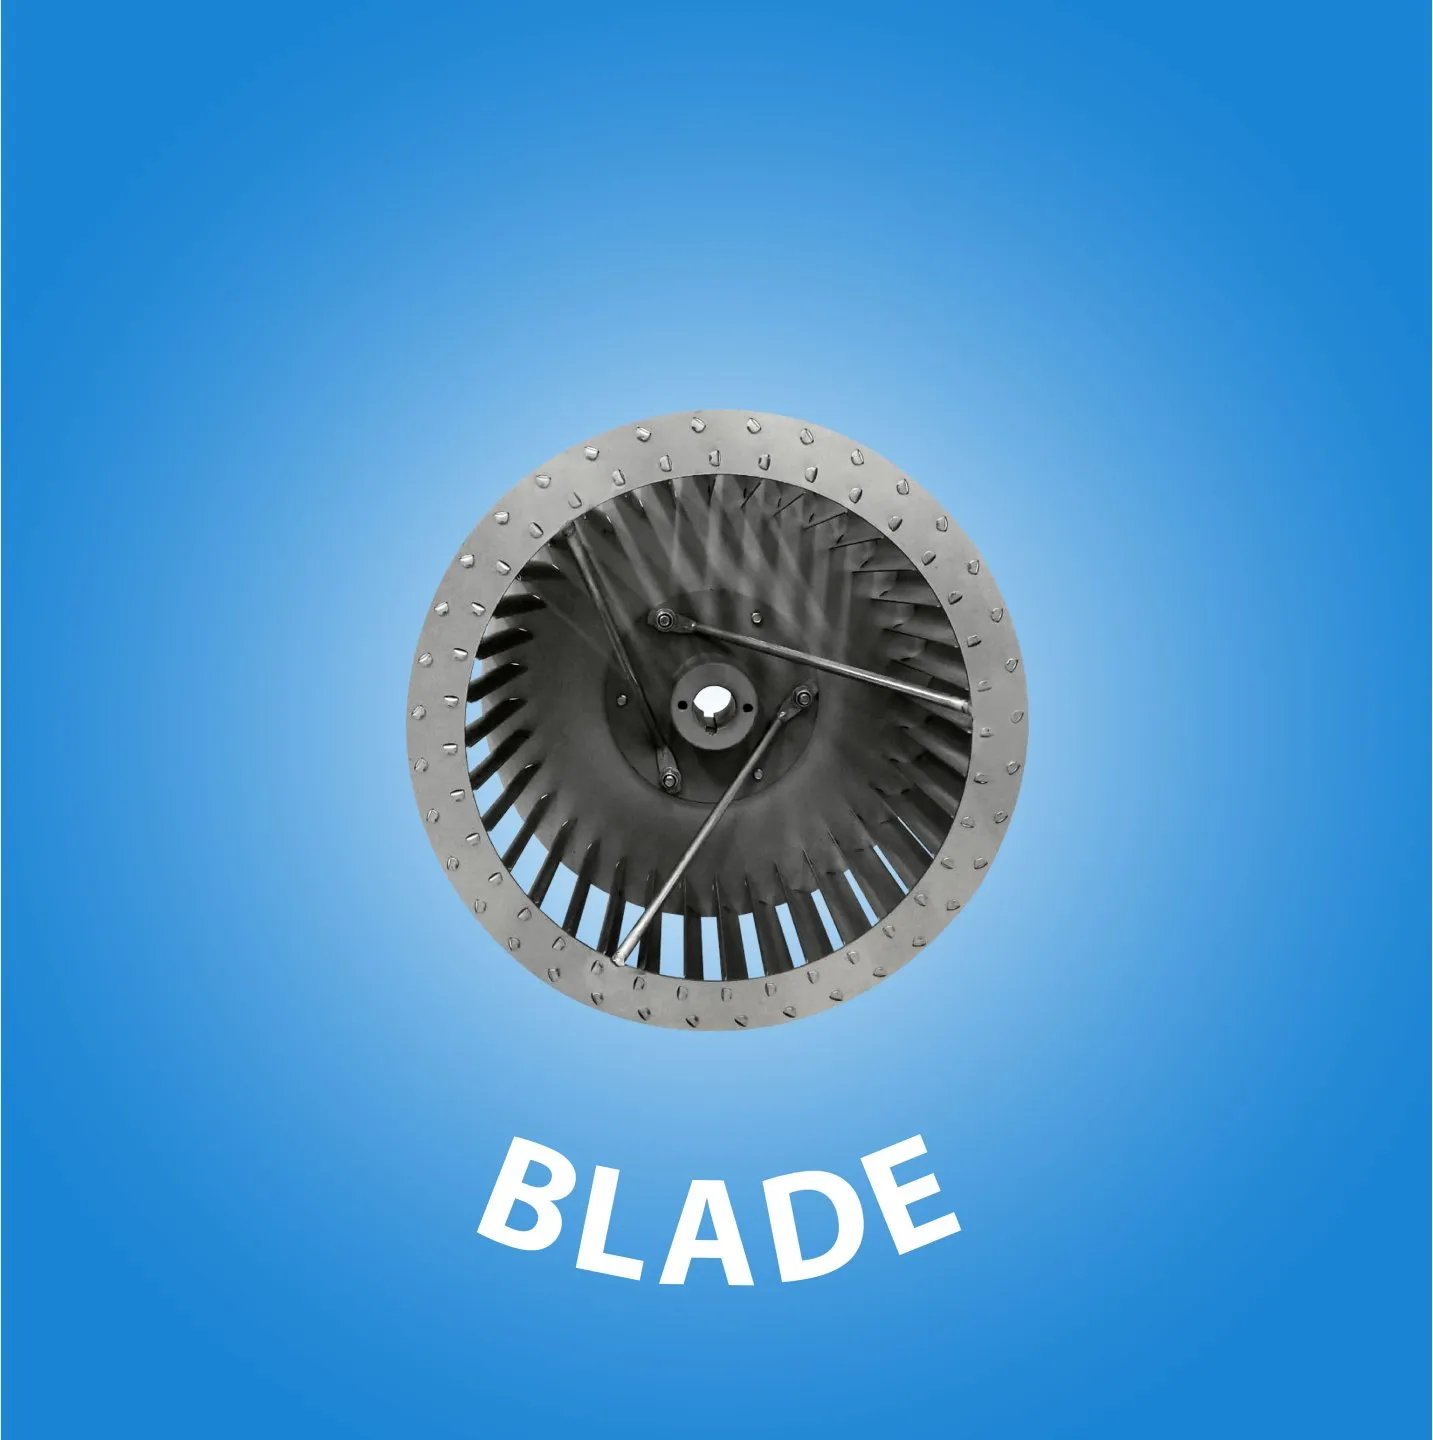  Blade cover kategori website 42